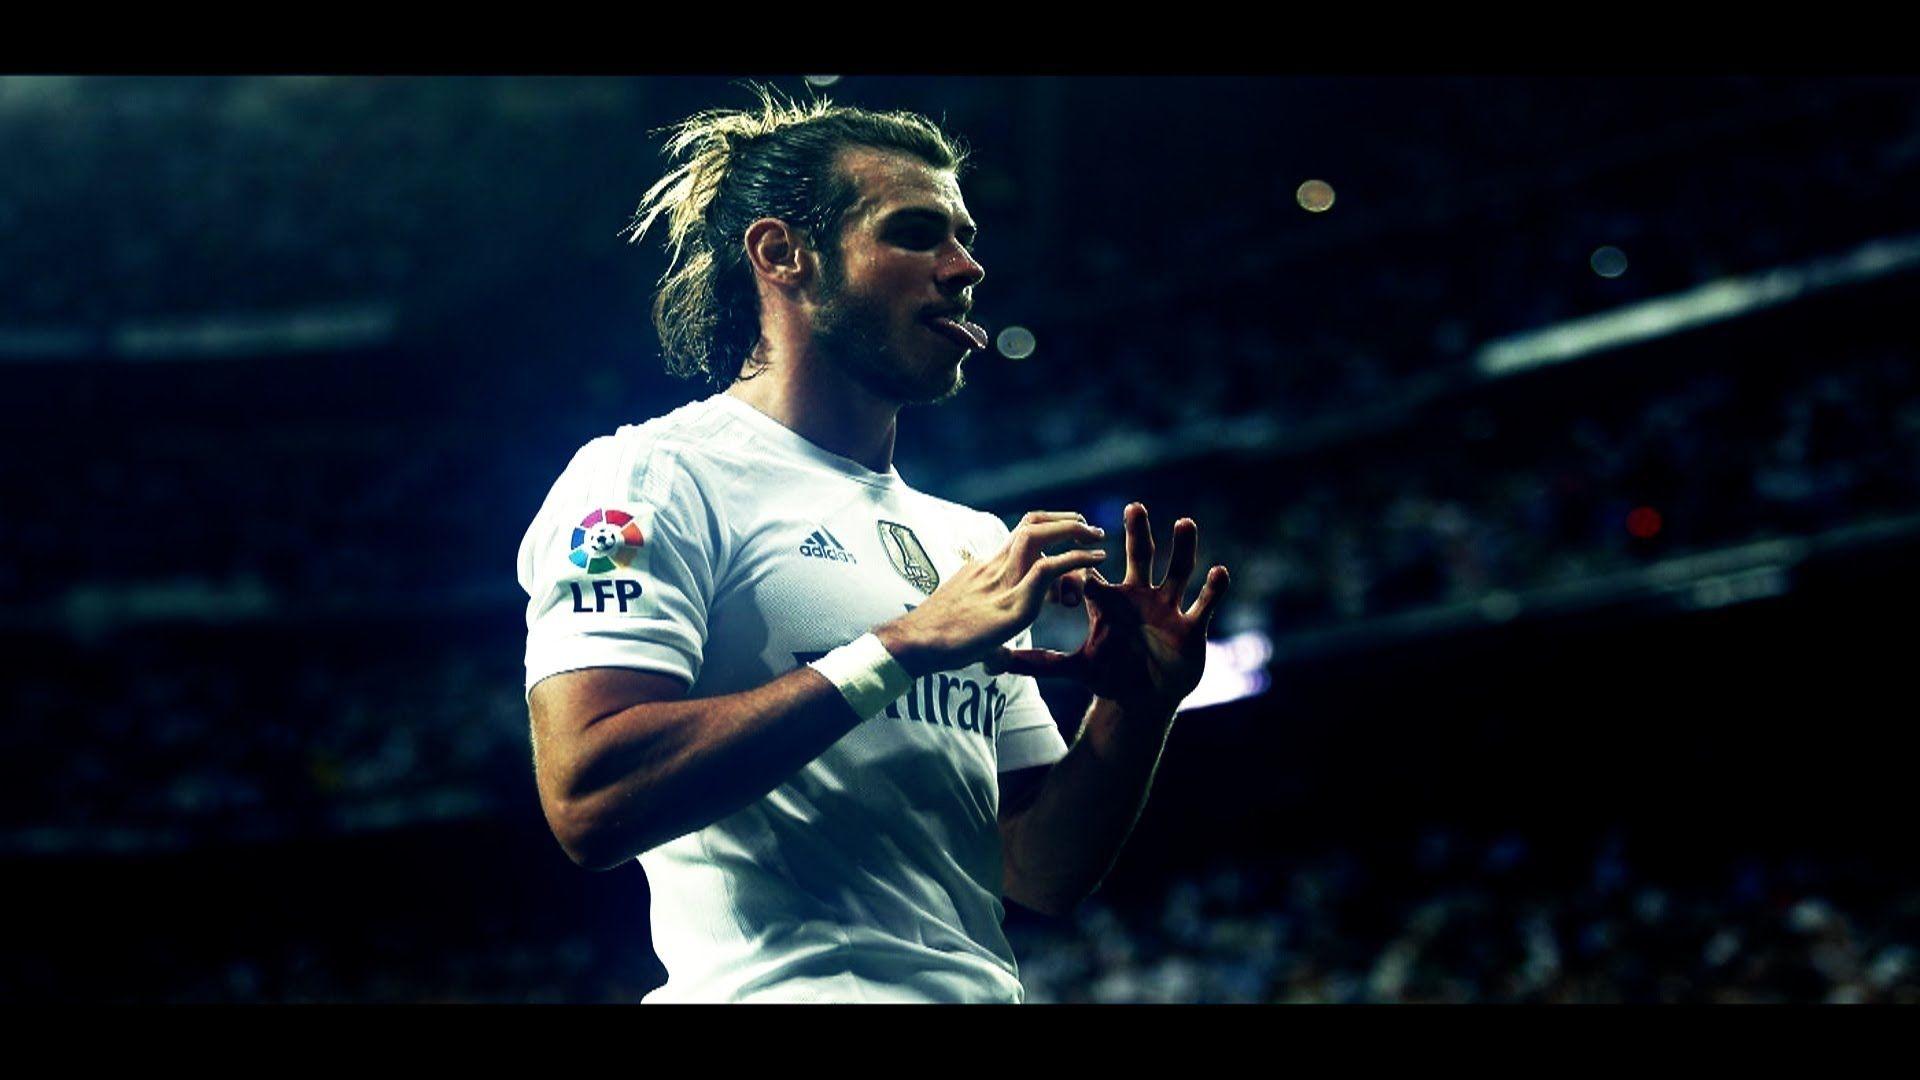 Gareth Bale Skills, Goals and Asissts & runs 2016